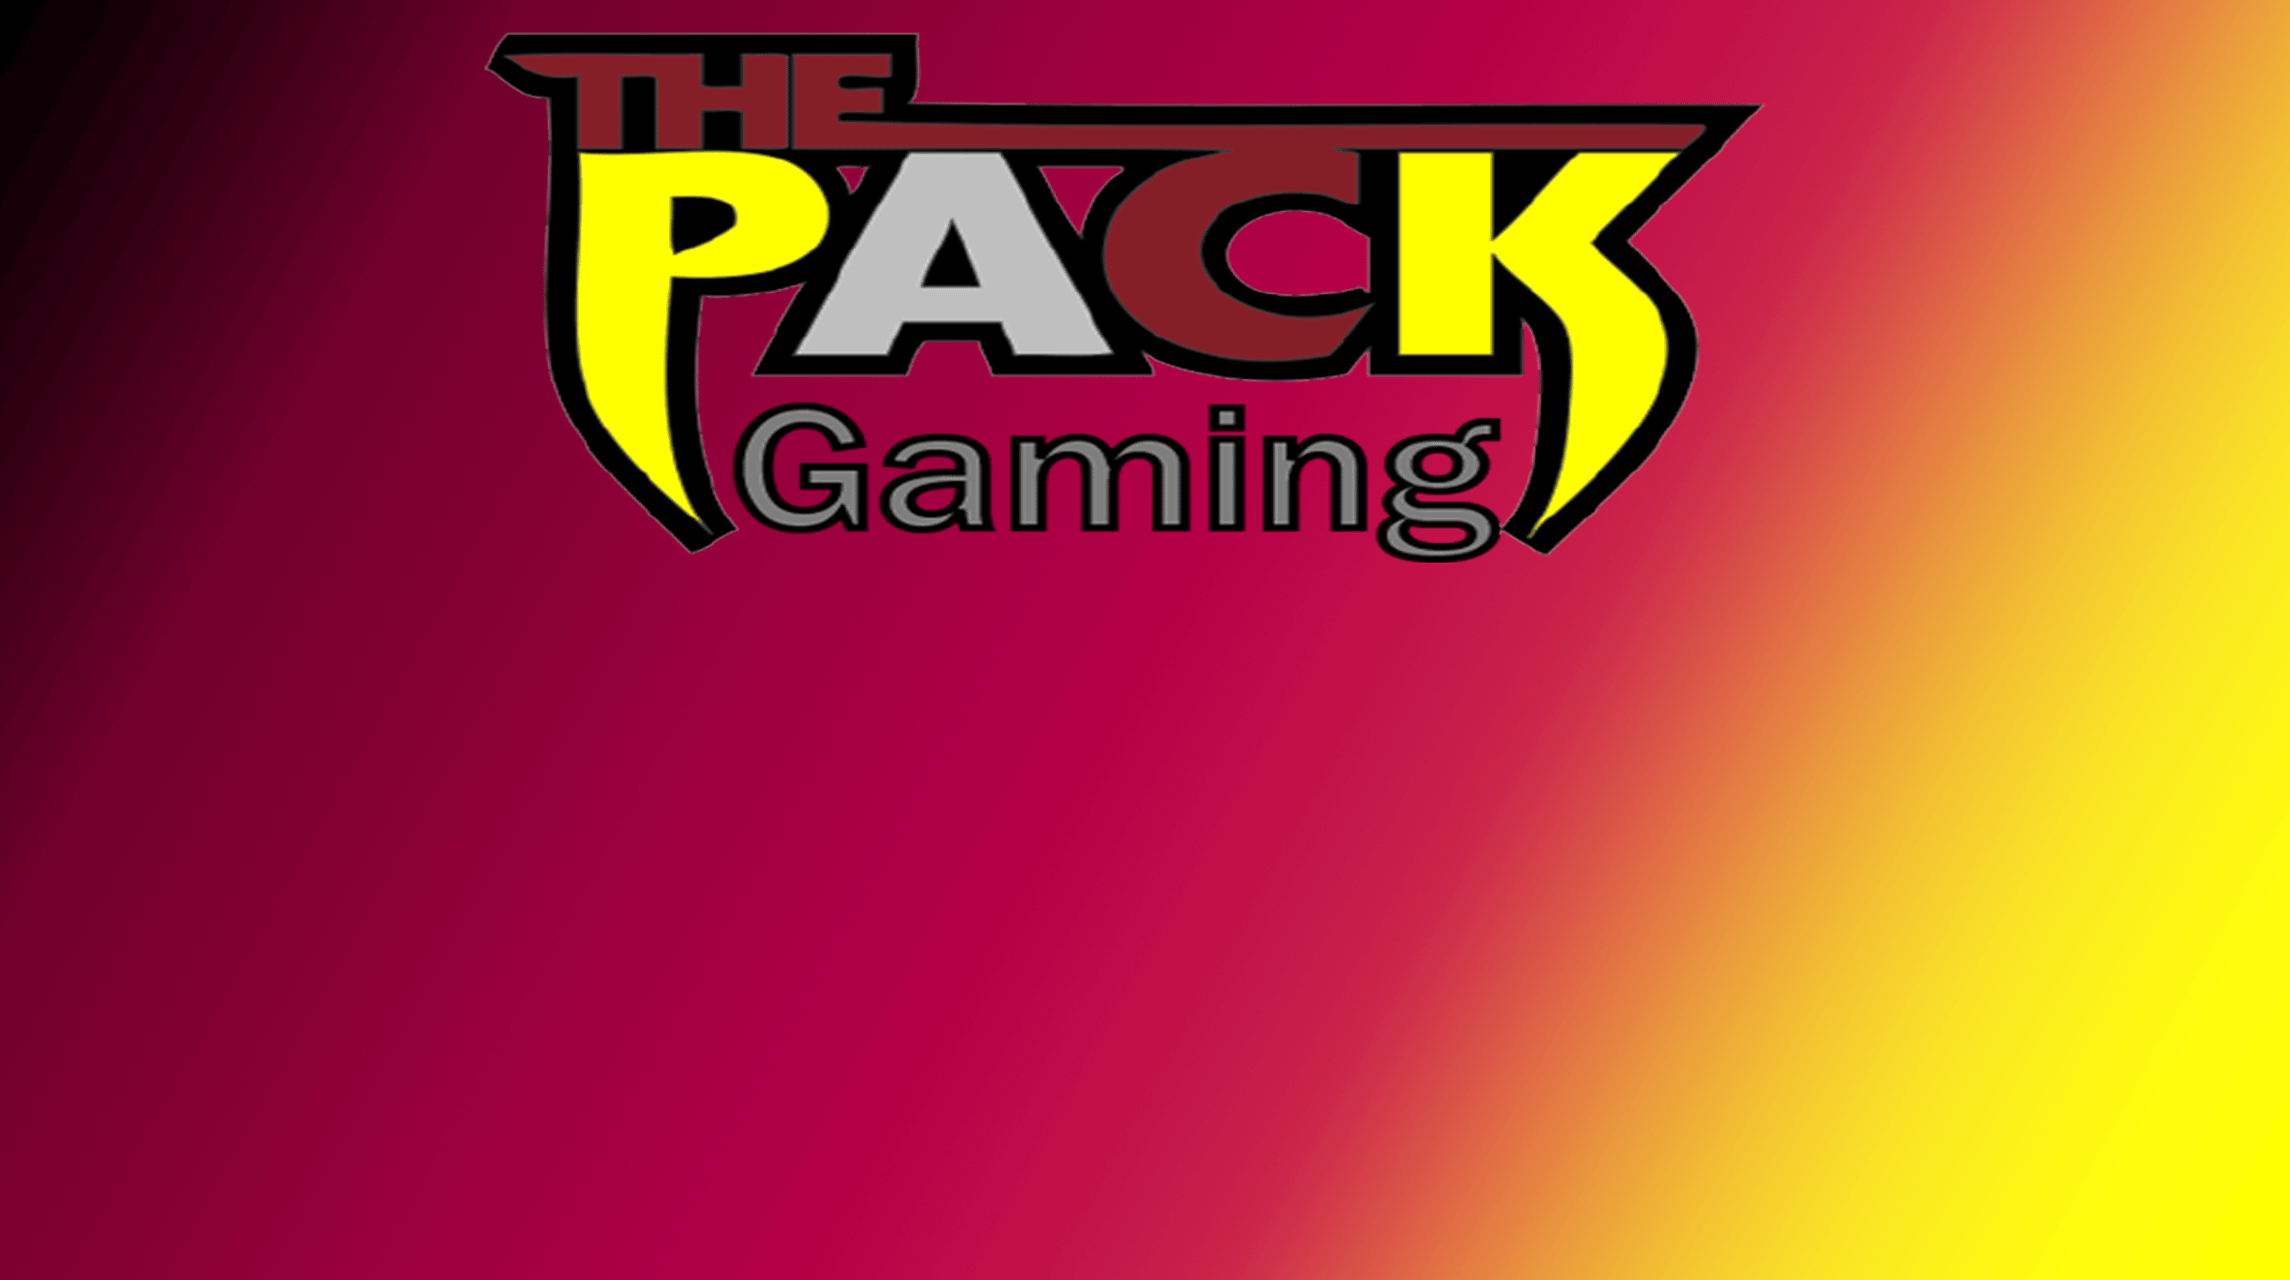 Gaming! The PACK Gaming